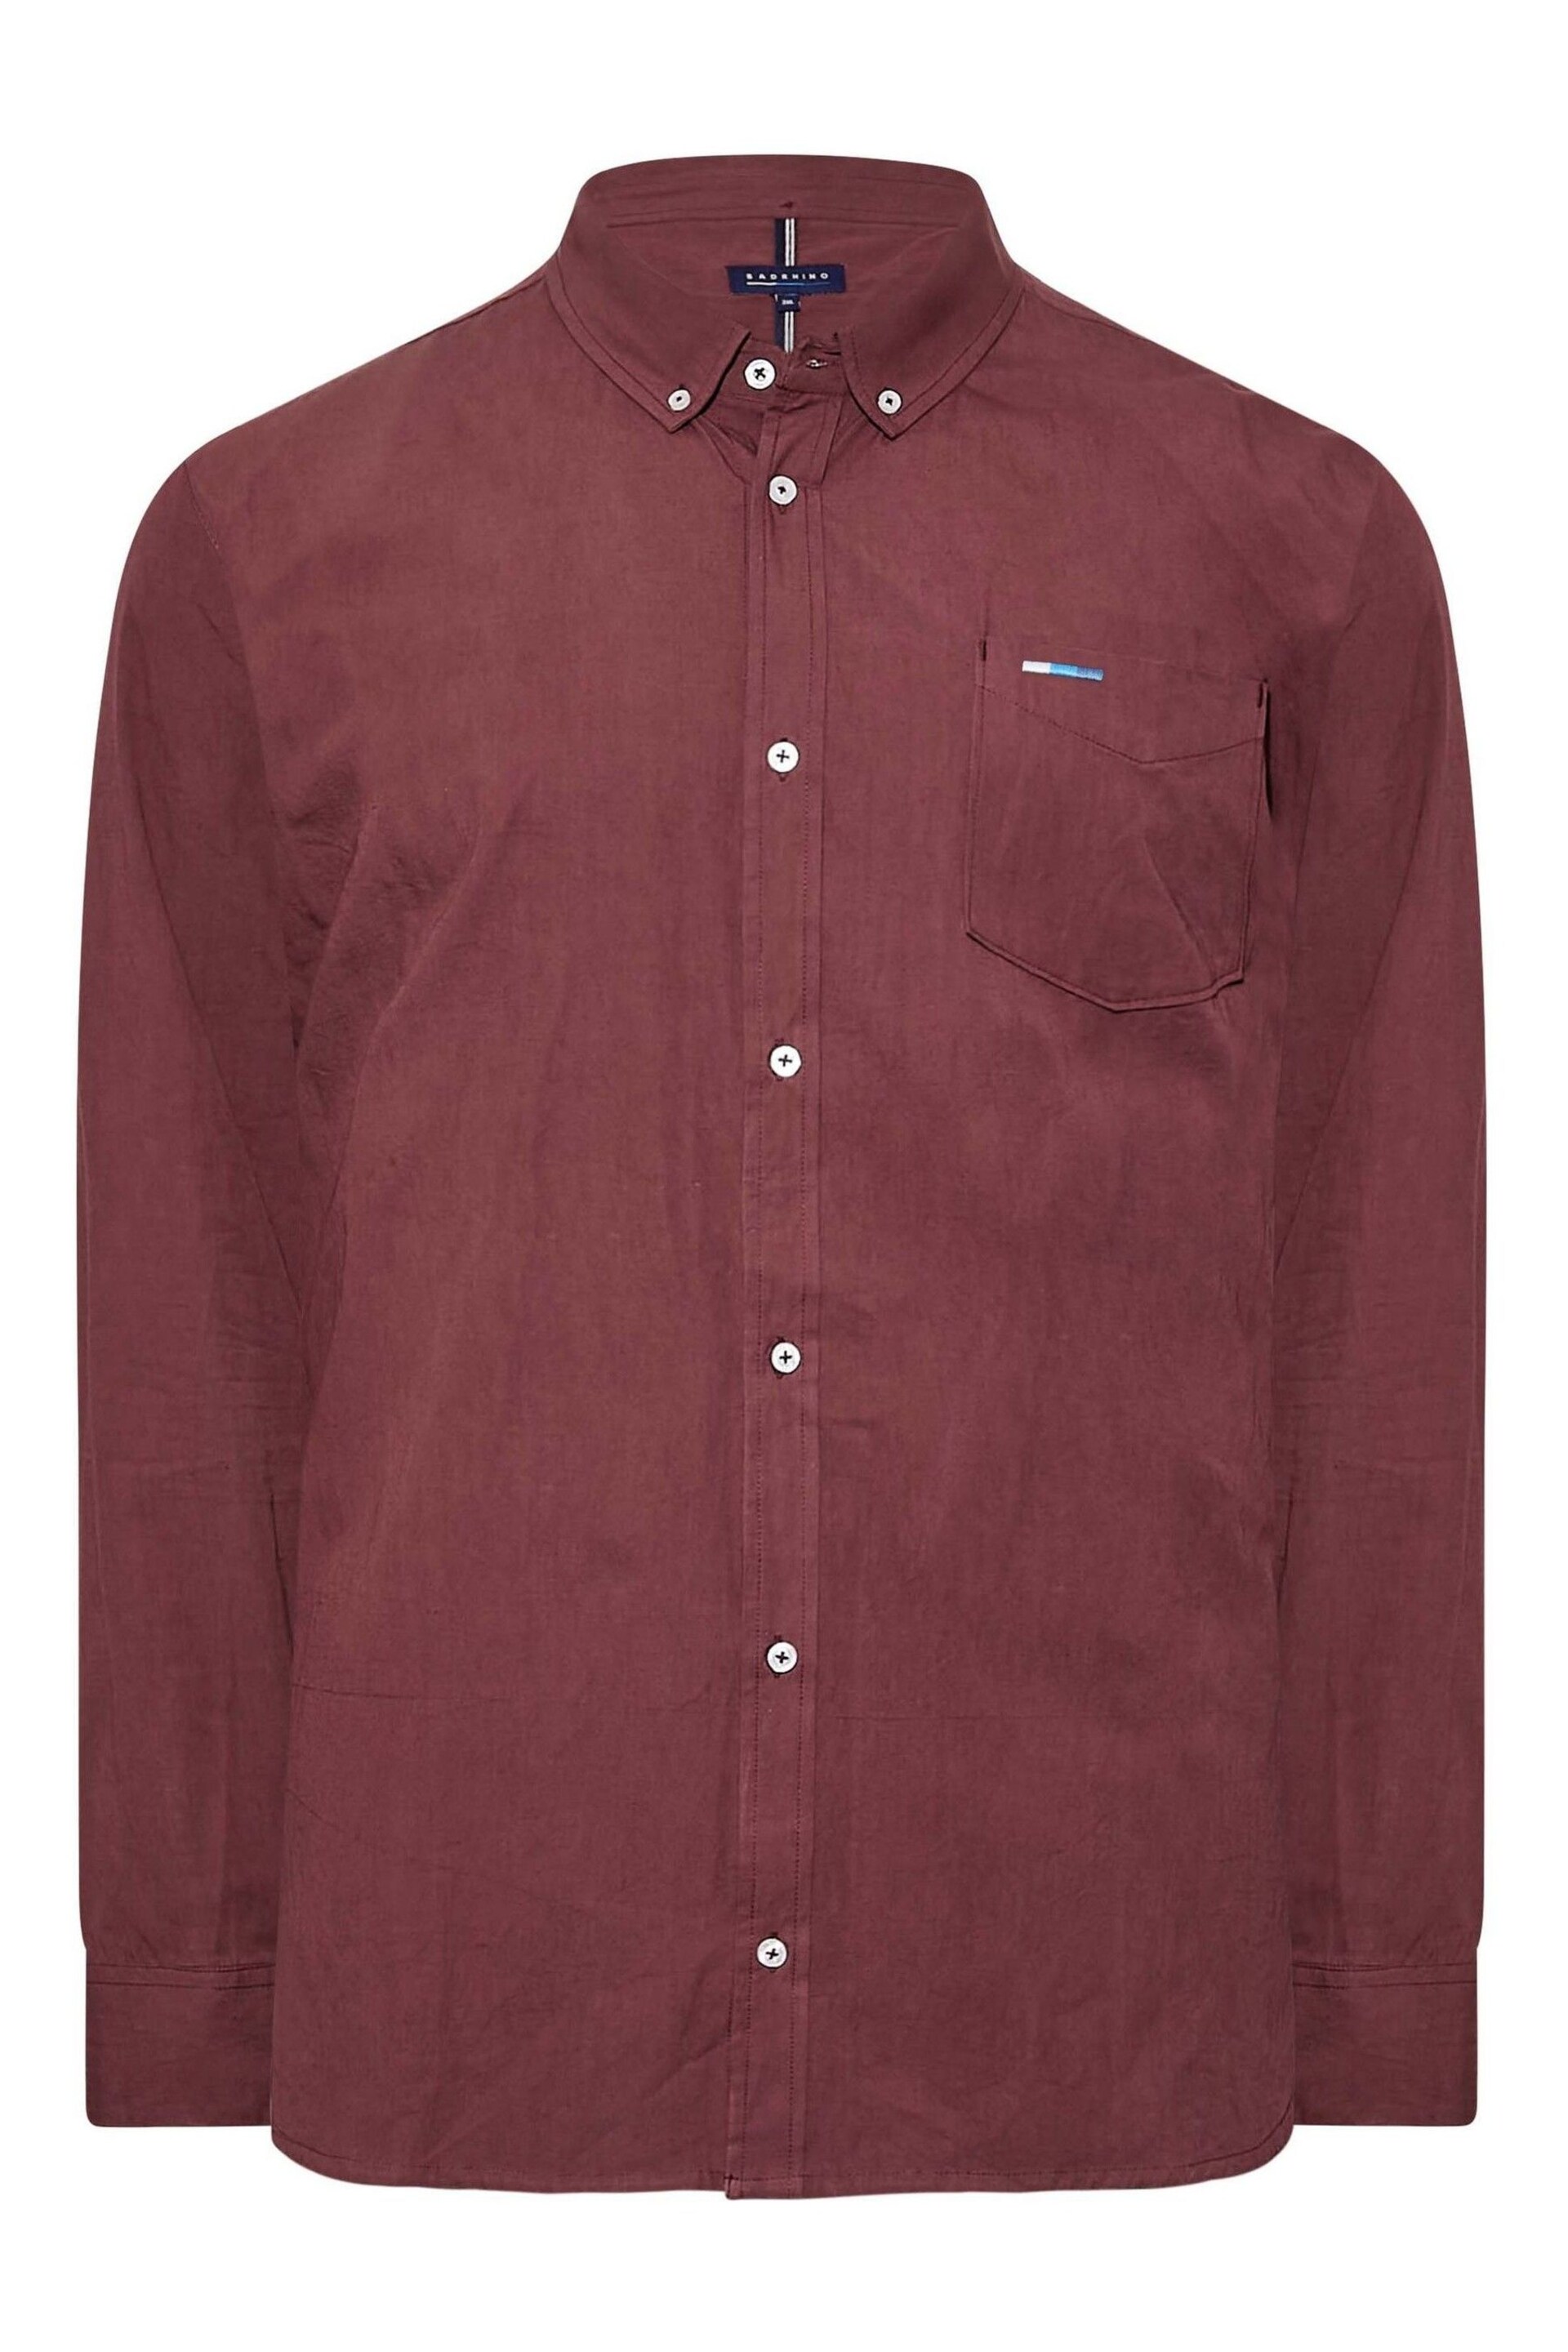 BadRhino Big & Tall Red Long Sleeve Oxford Shirt - Image 2 of 3